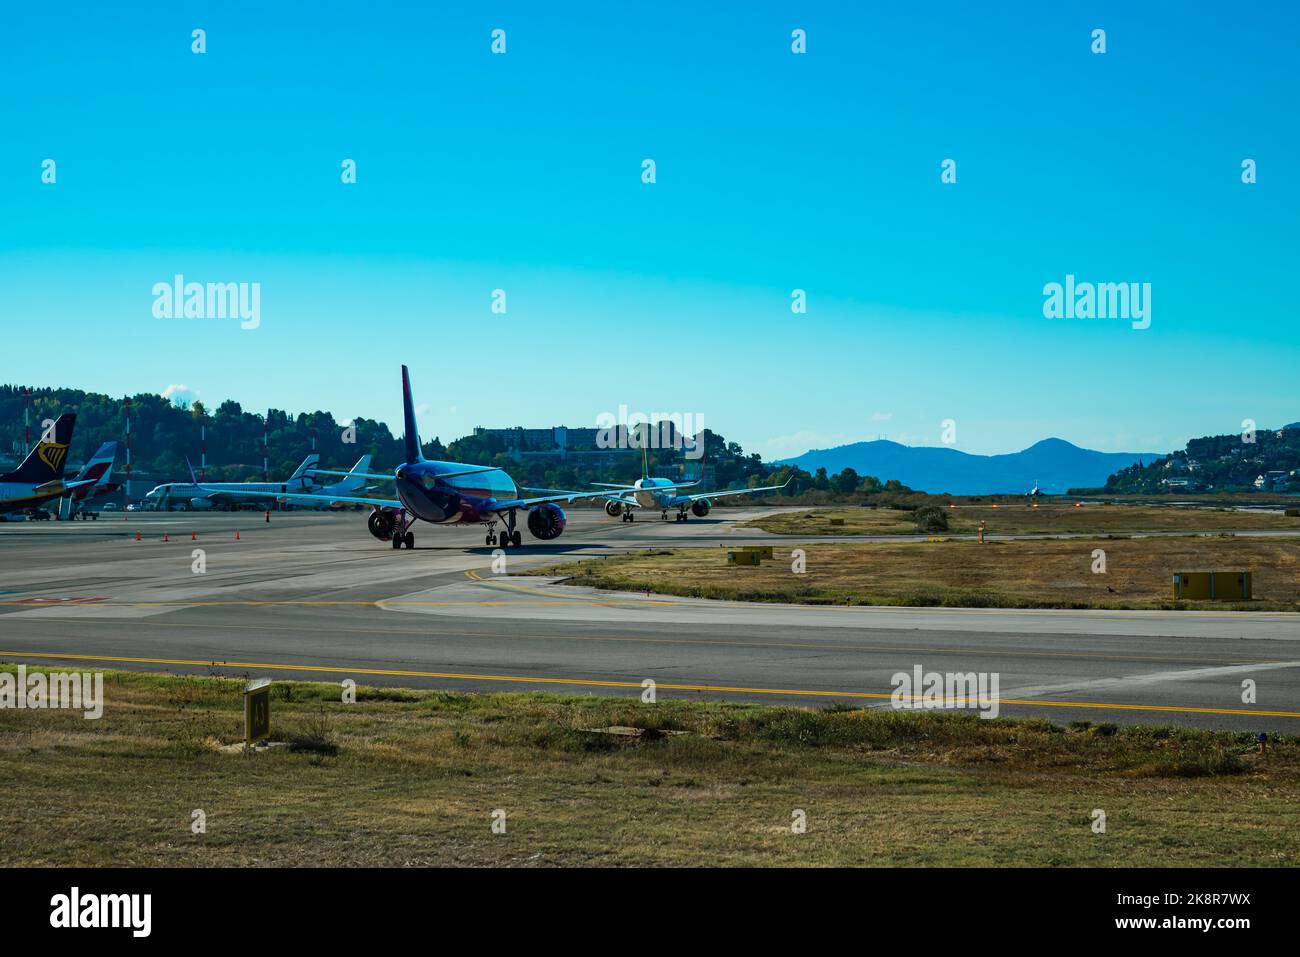 Kerkyra, Greece - 09222022:WIZZ AIR Plane Preparing for Takeoff at Corfu Airport Stock Photo